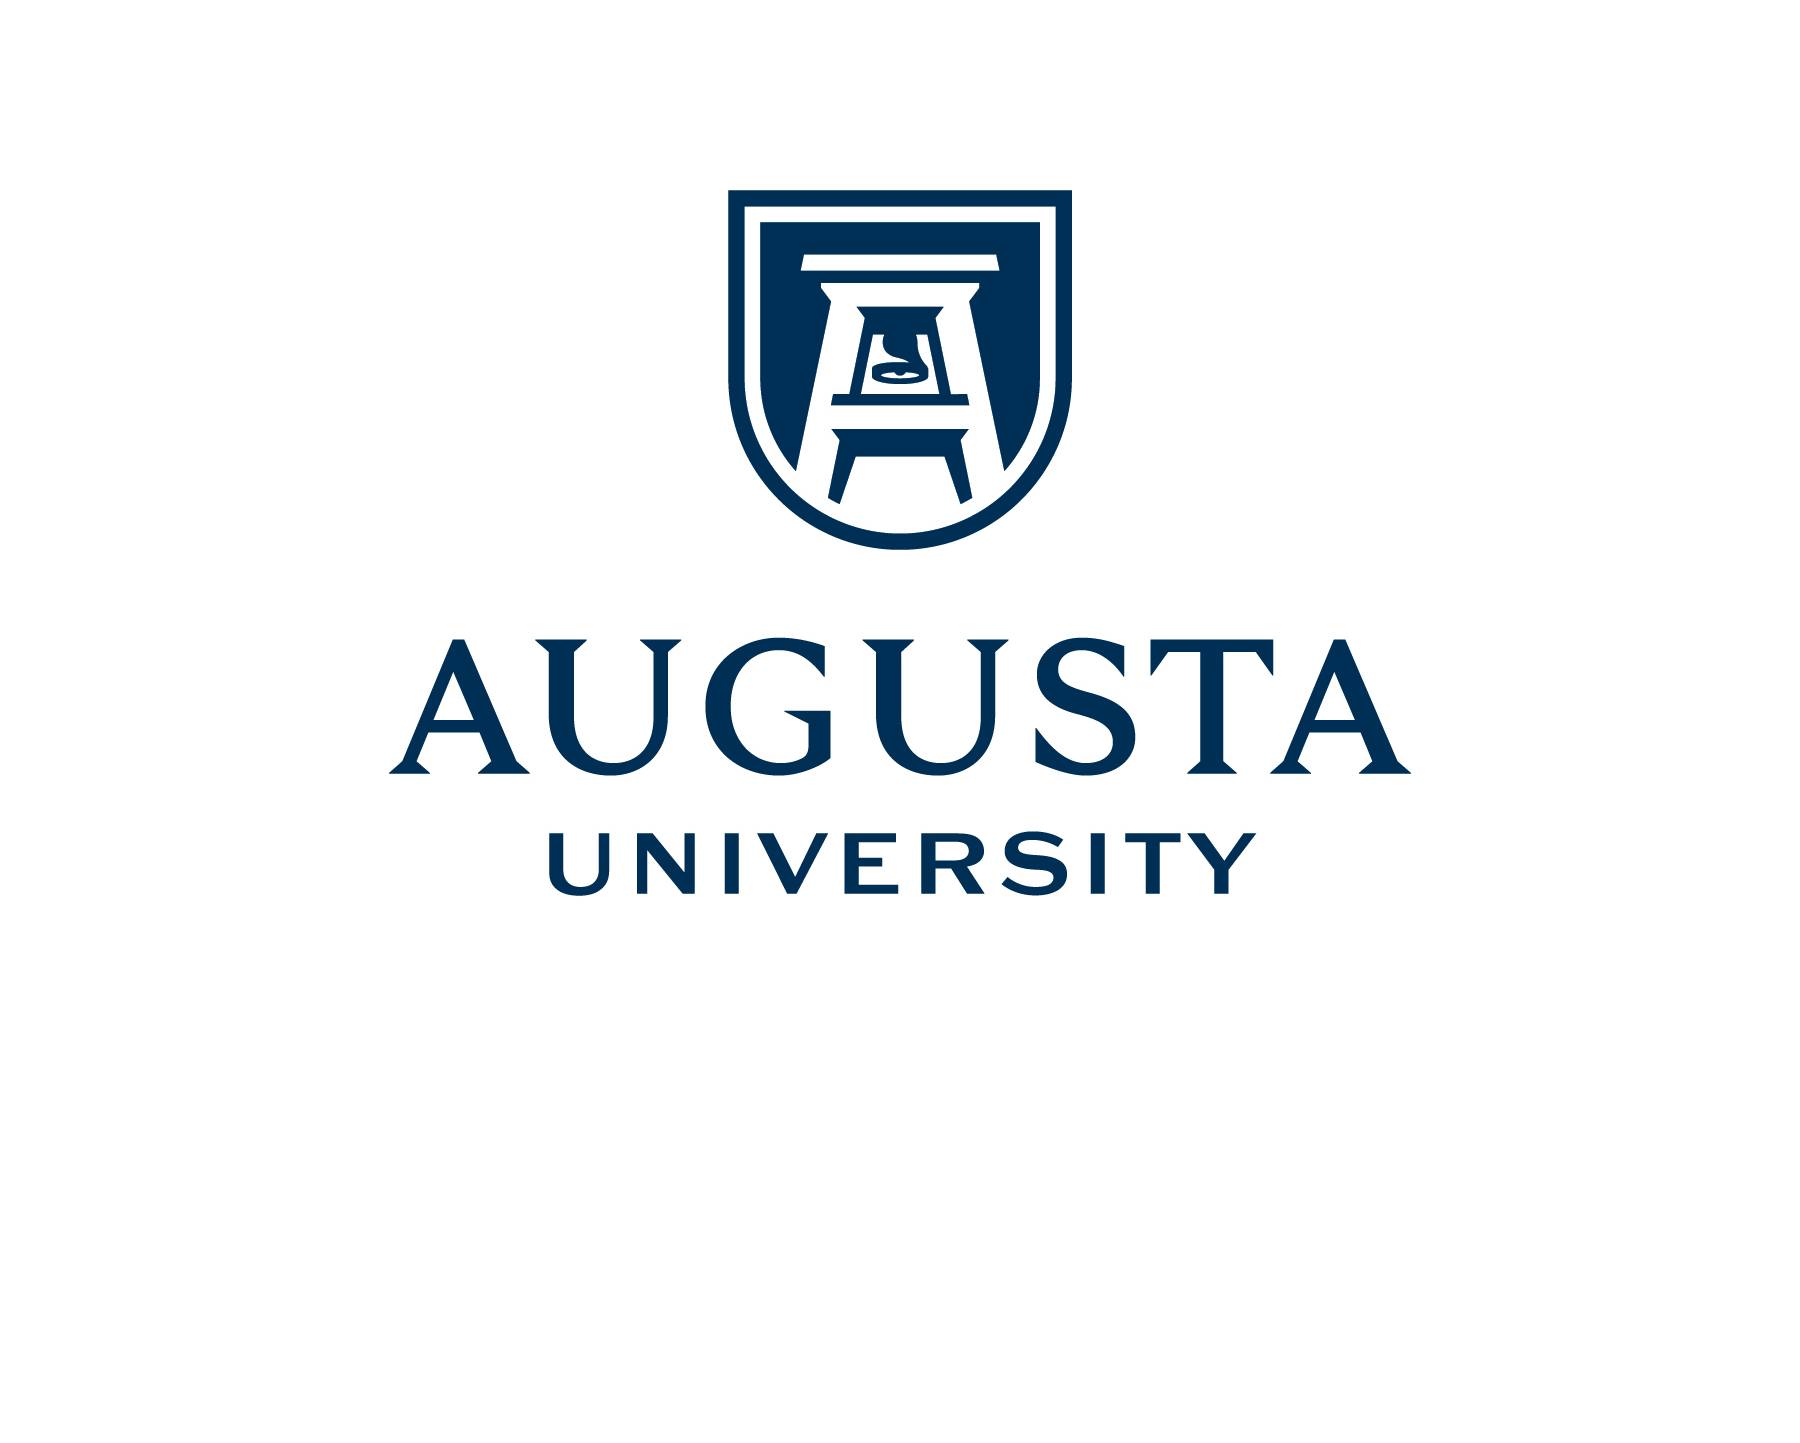 Augusta University logo (stacked version)